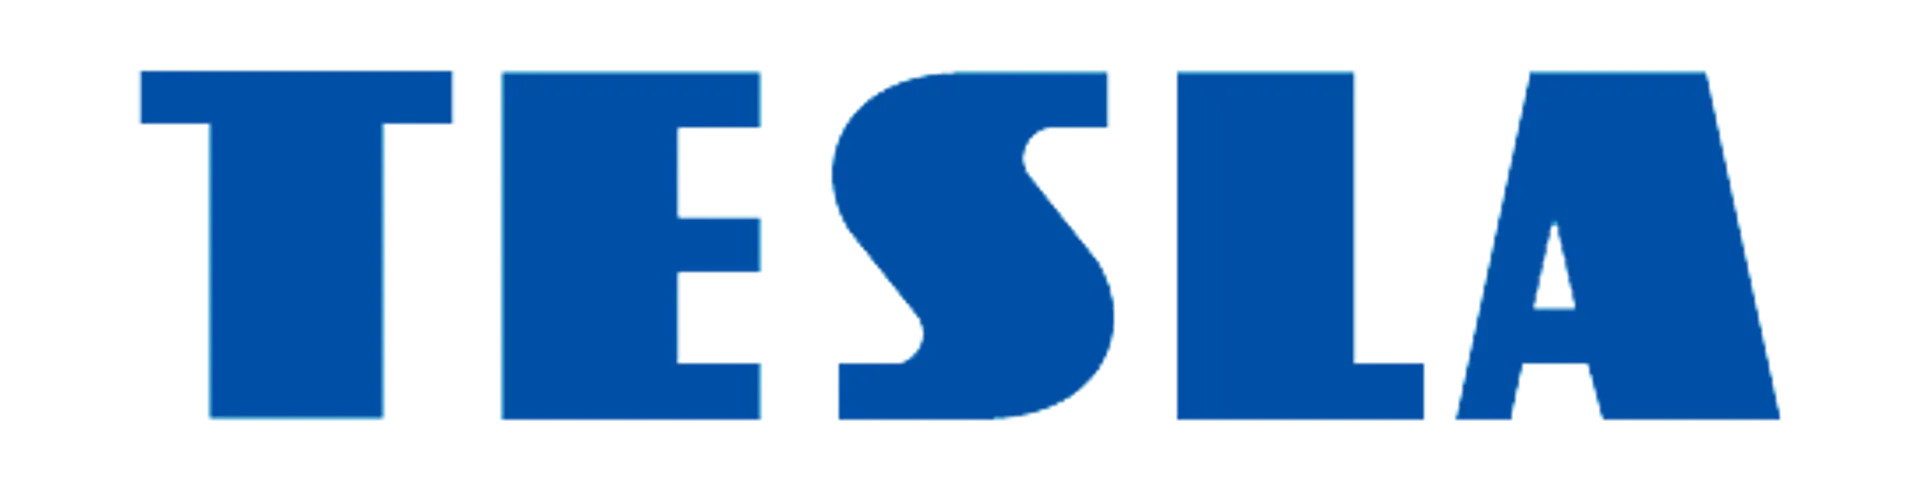 TESLAROBOT logo